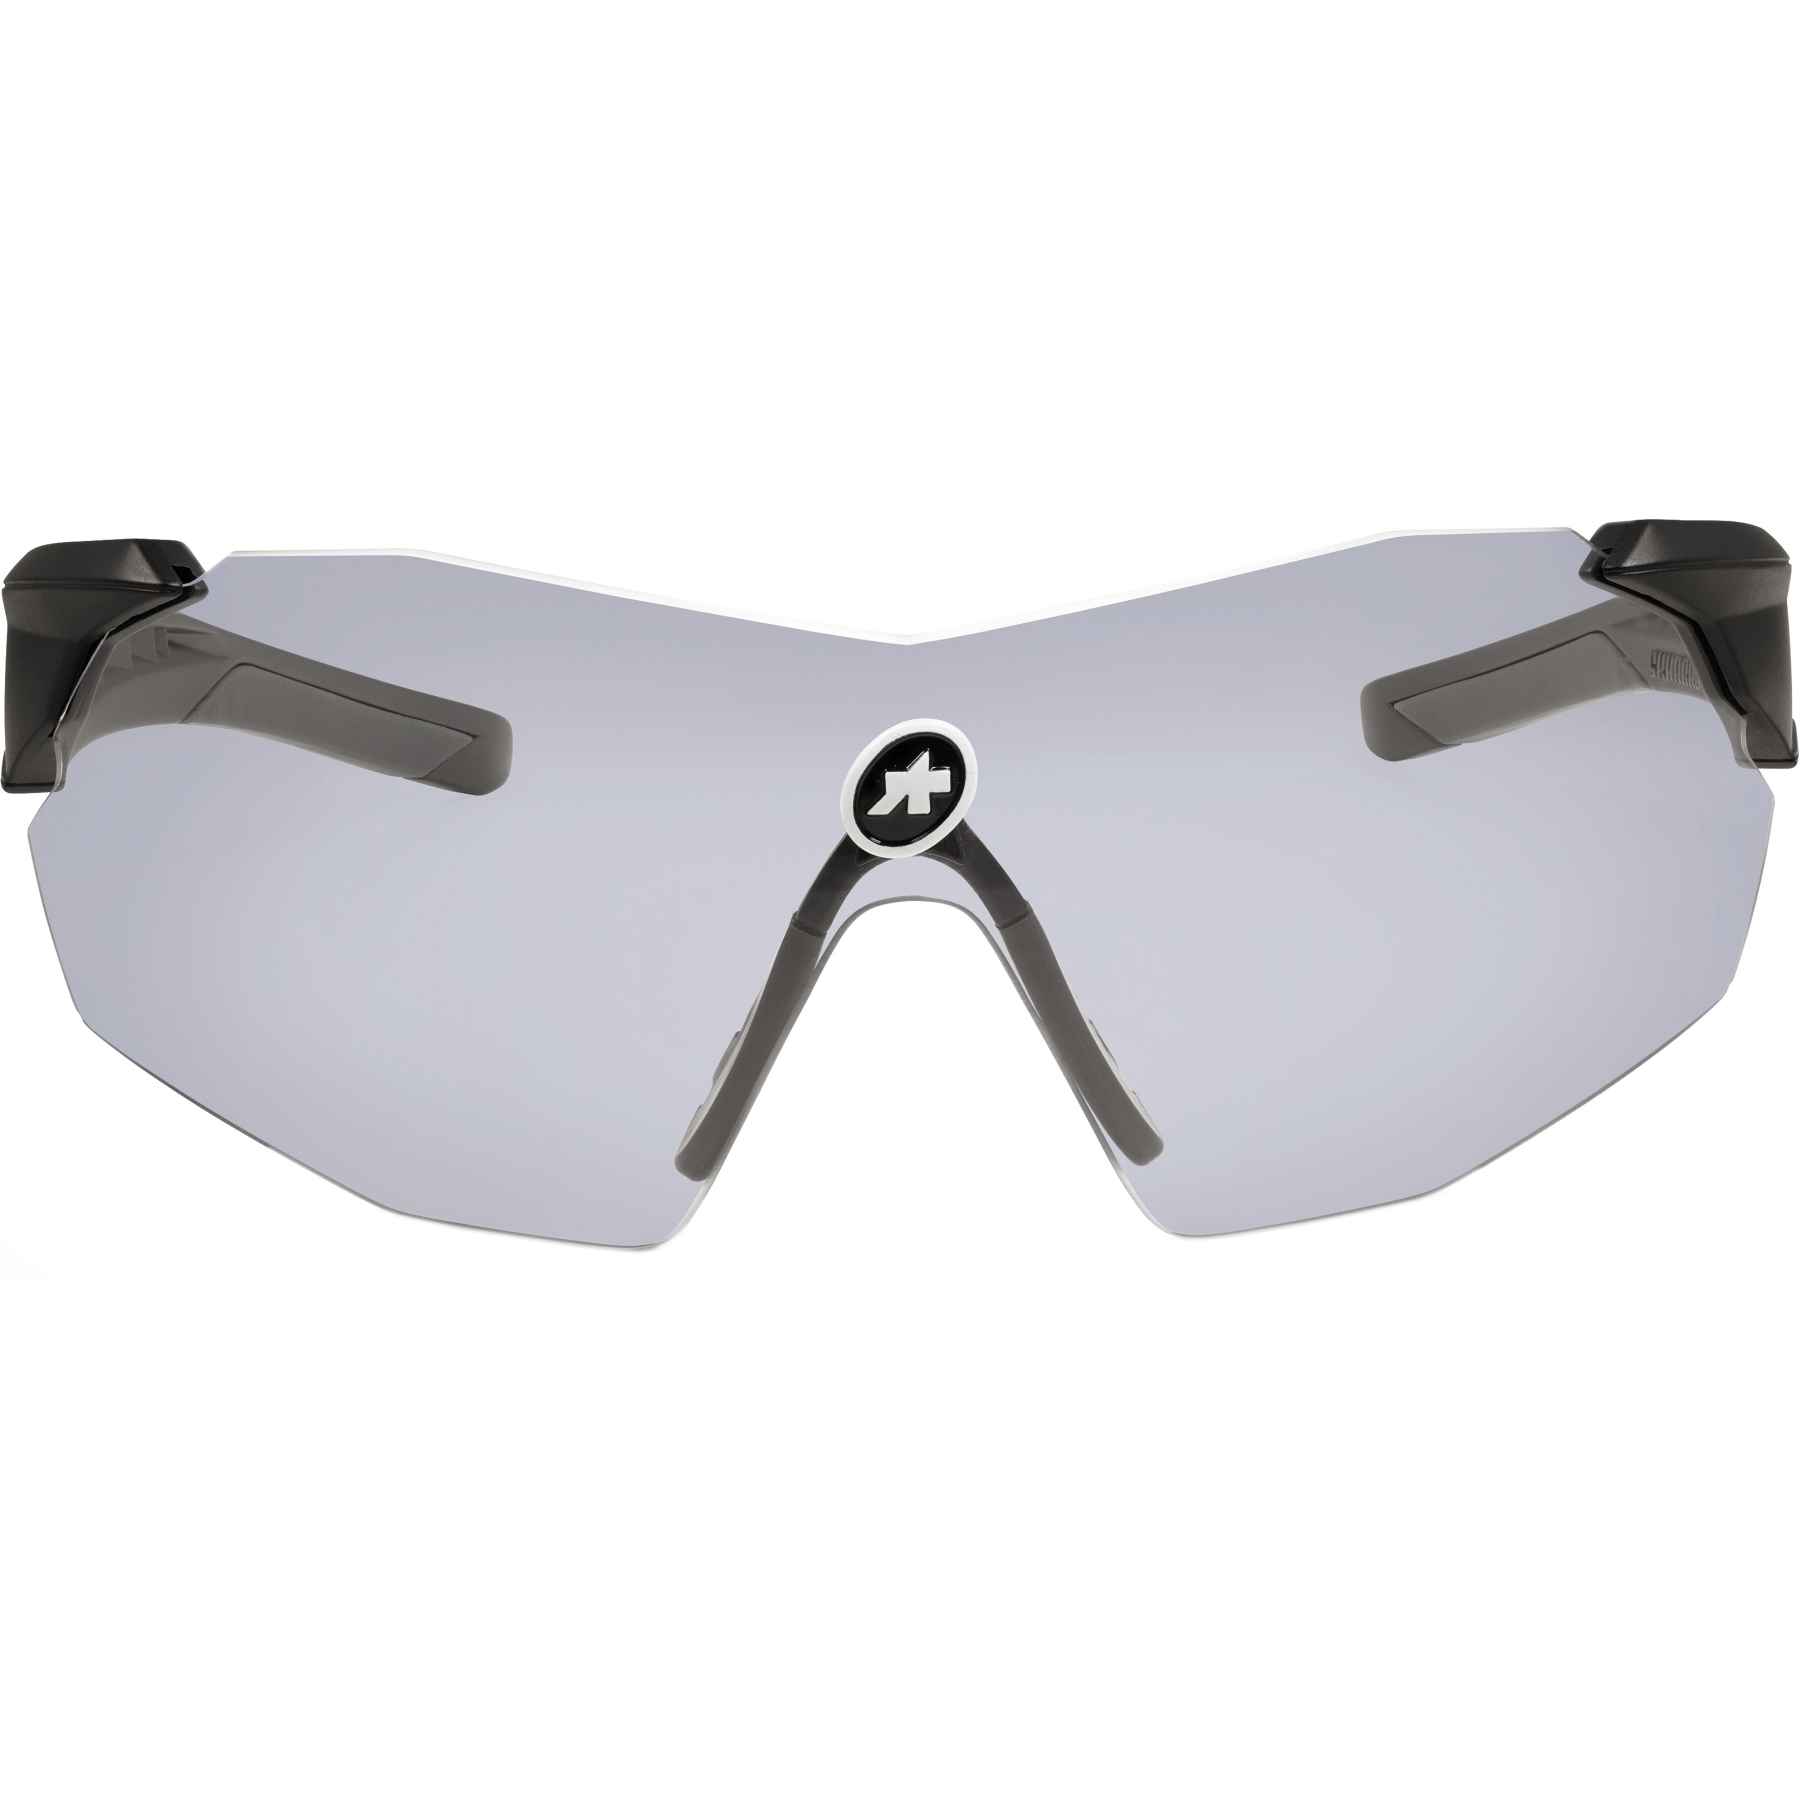 Productfoto van Assos EYEWEAR Skharab Pluto Grey Glasses